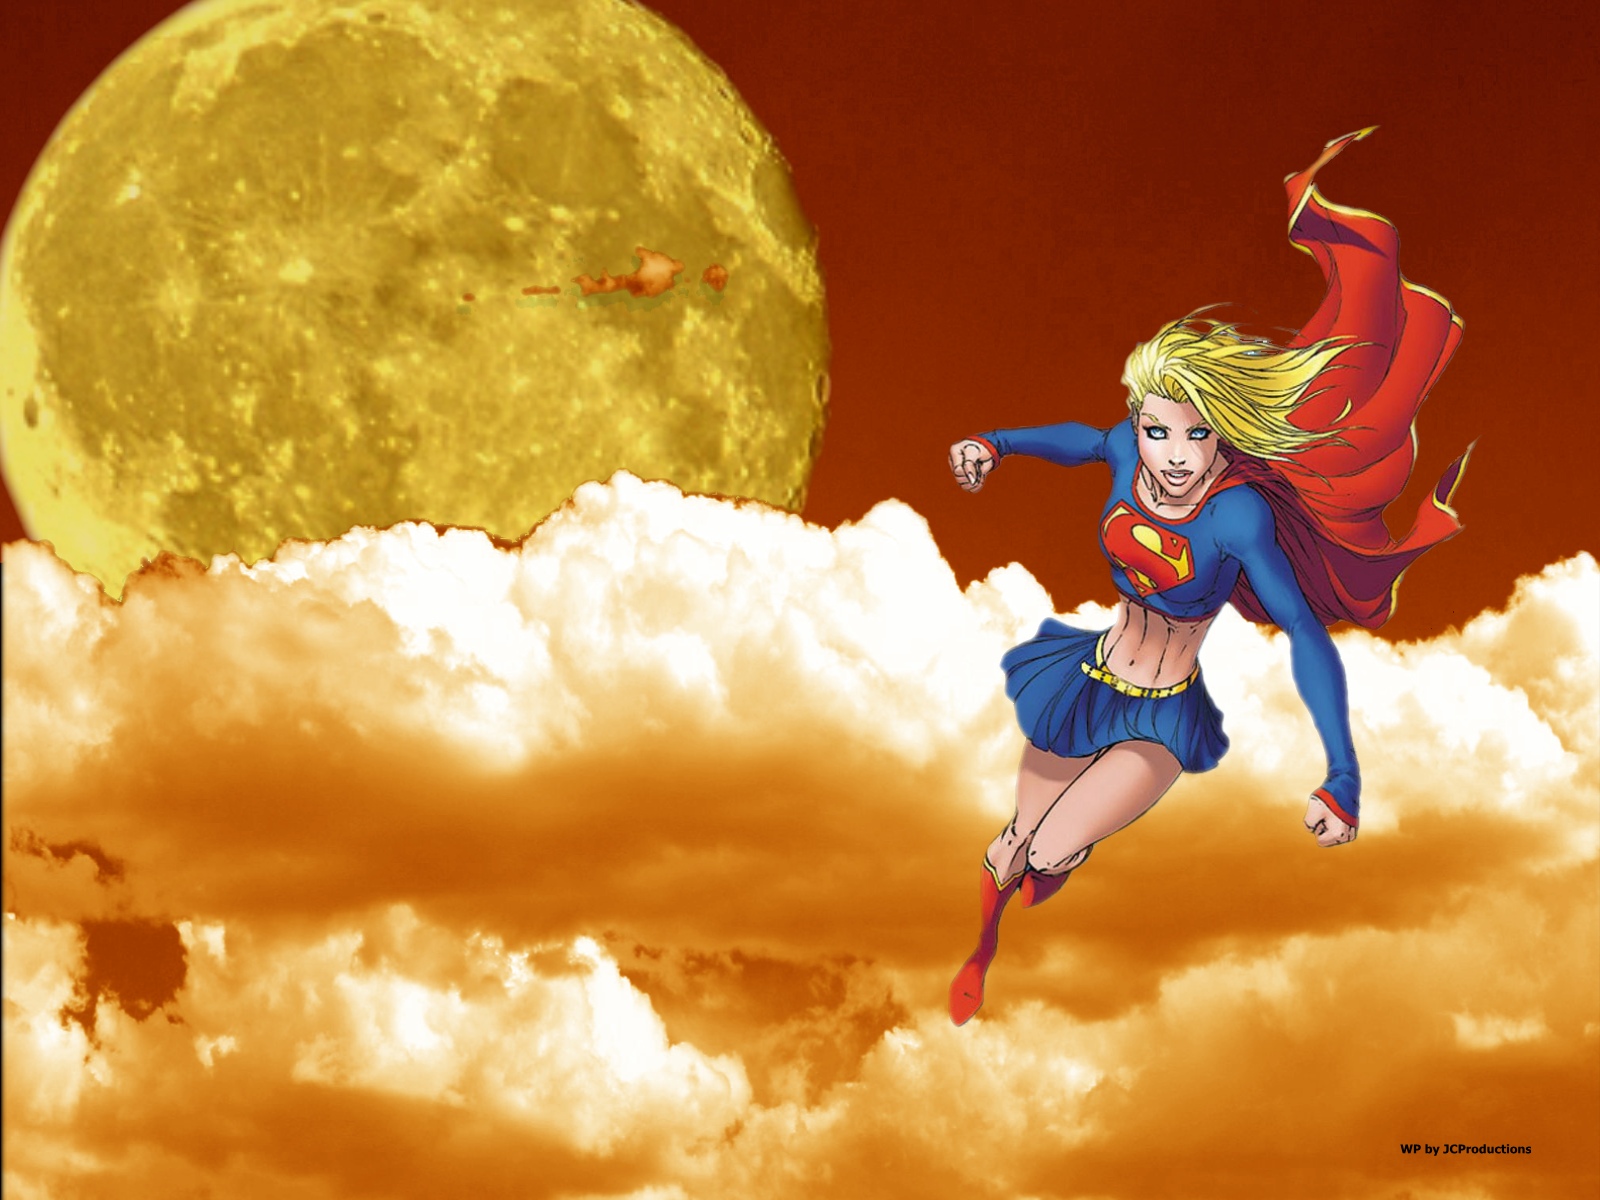 Download High quality supergirl, kara, lex luthor, supergirl wallpapers, superman, clark kent, lois lane, lana lang Character Supergirl wallpaper / 1600x1200